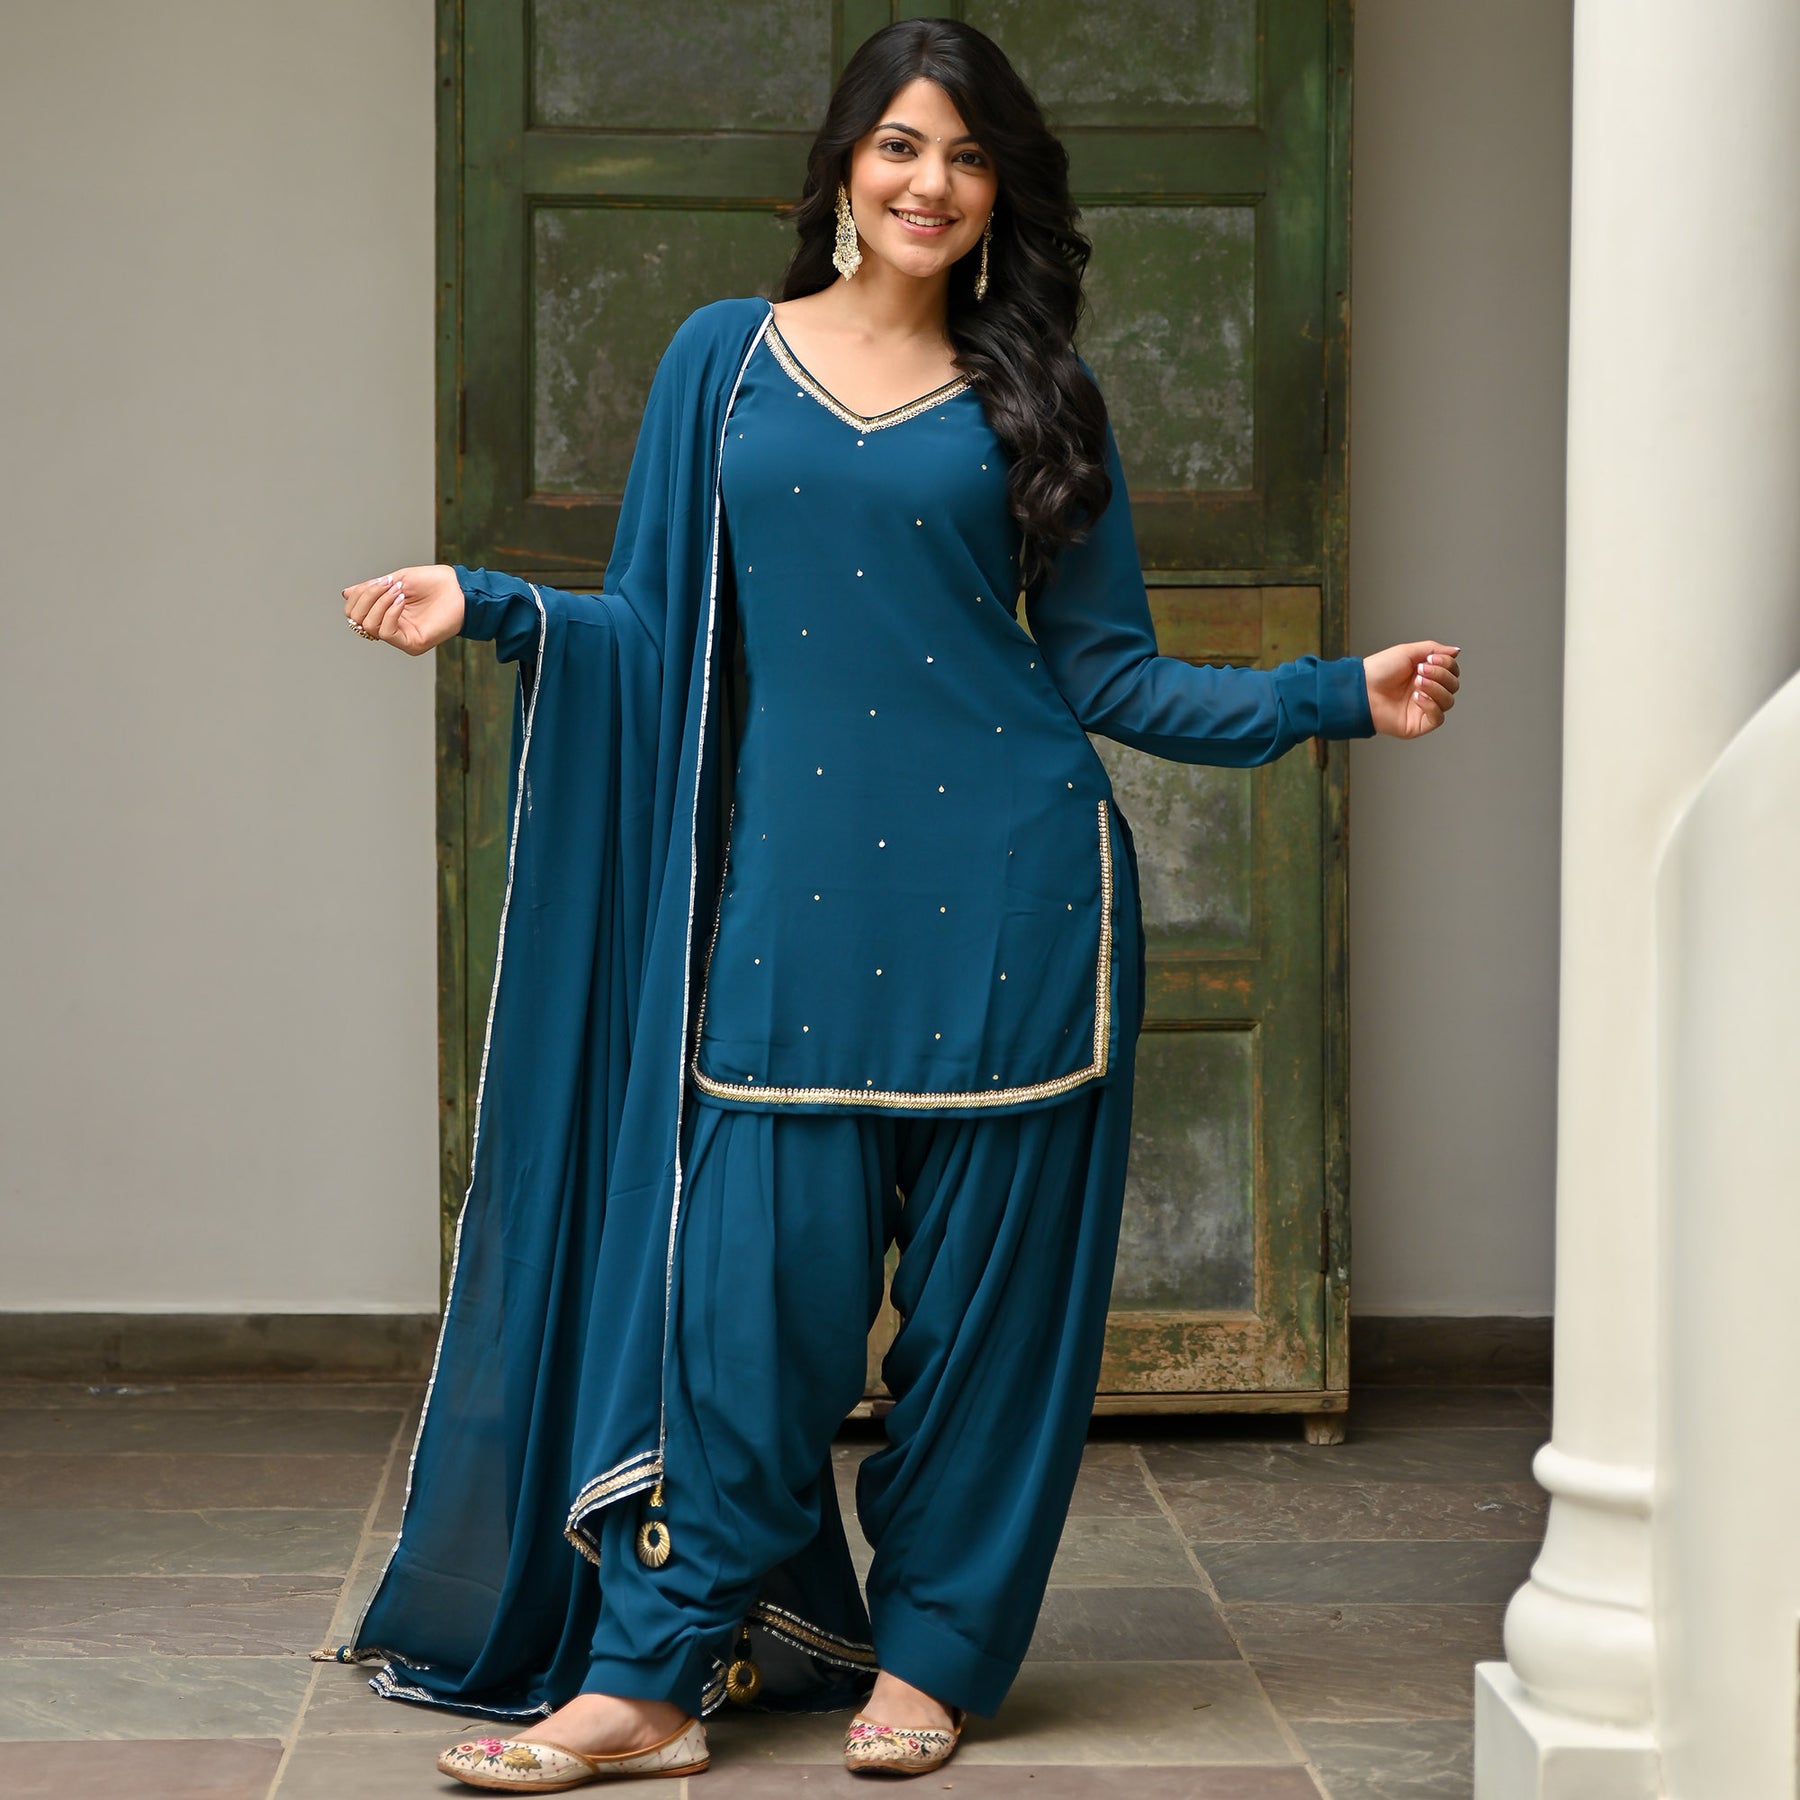 30 Different Types of Salwar Neck Designs To Look Stylish | Salwar neck  designs, Patiala suit, Patiala salwar suits